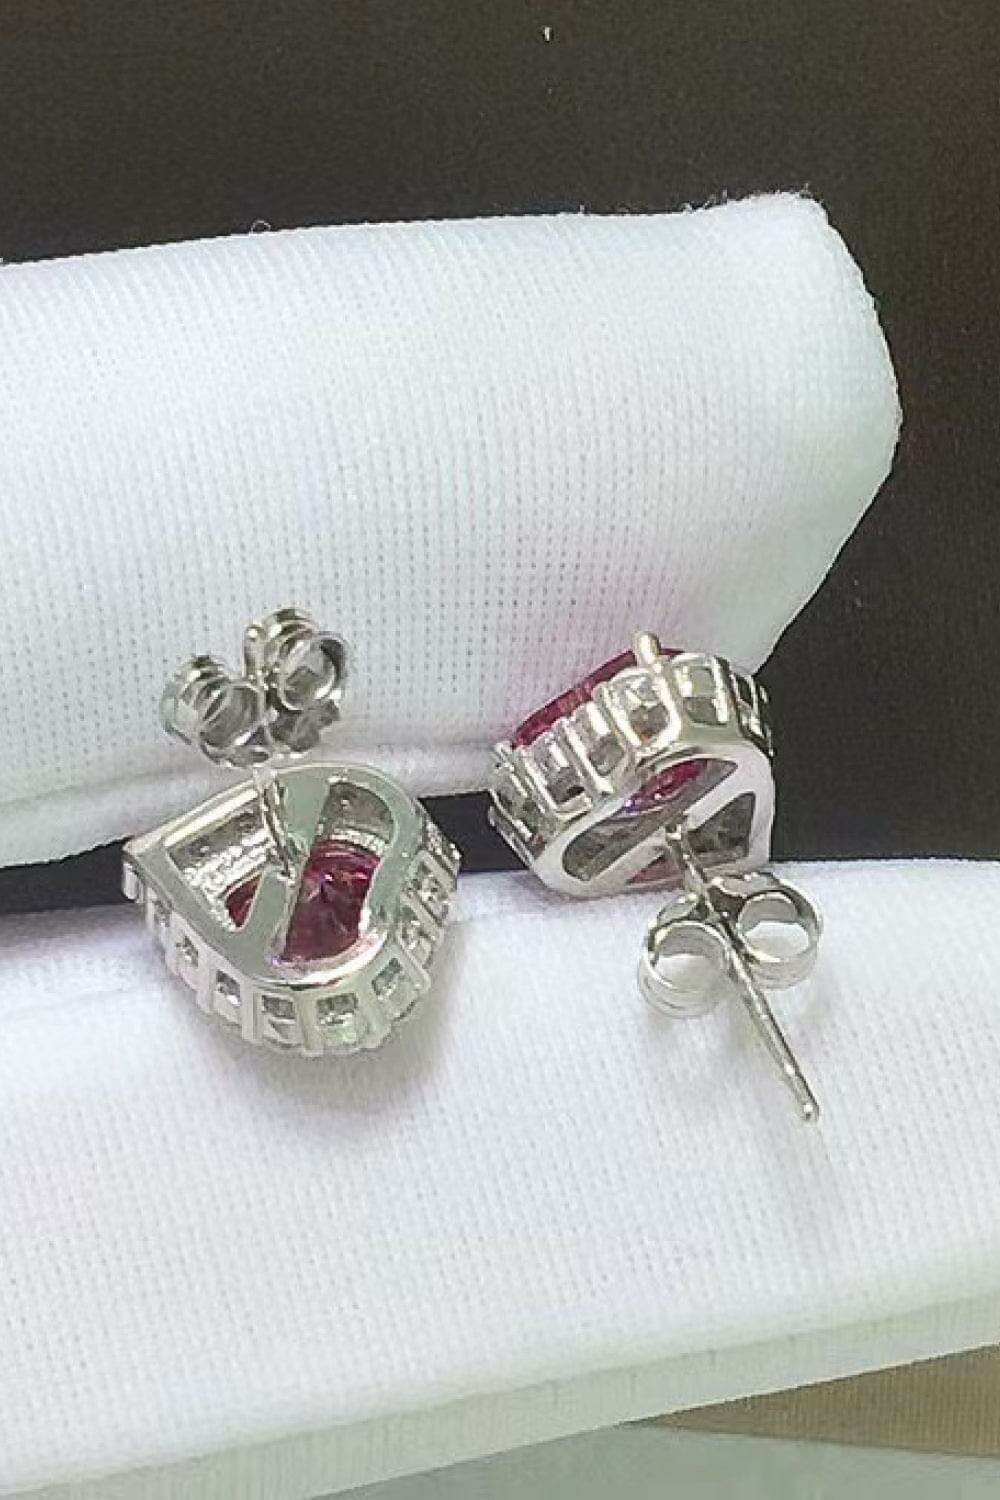 2 Carat Moissanite Heart-Shaped Earrings - earrings at TFC&H Co.